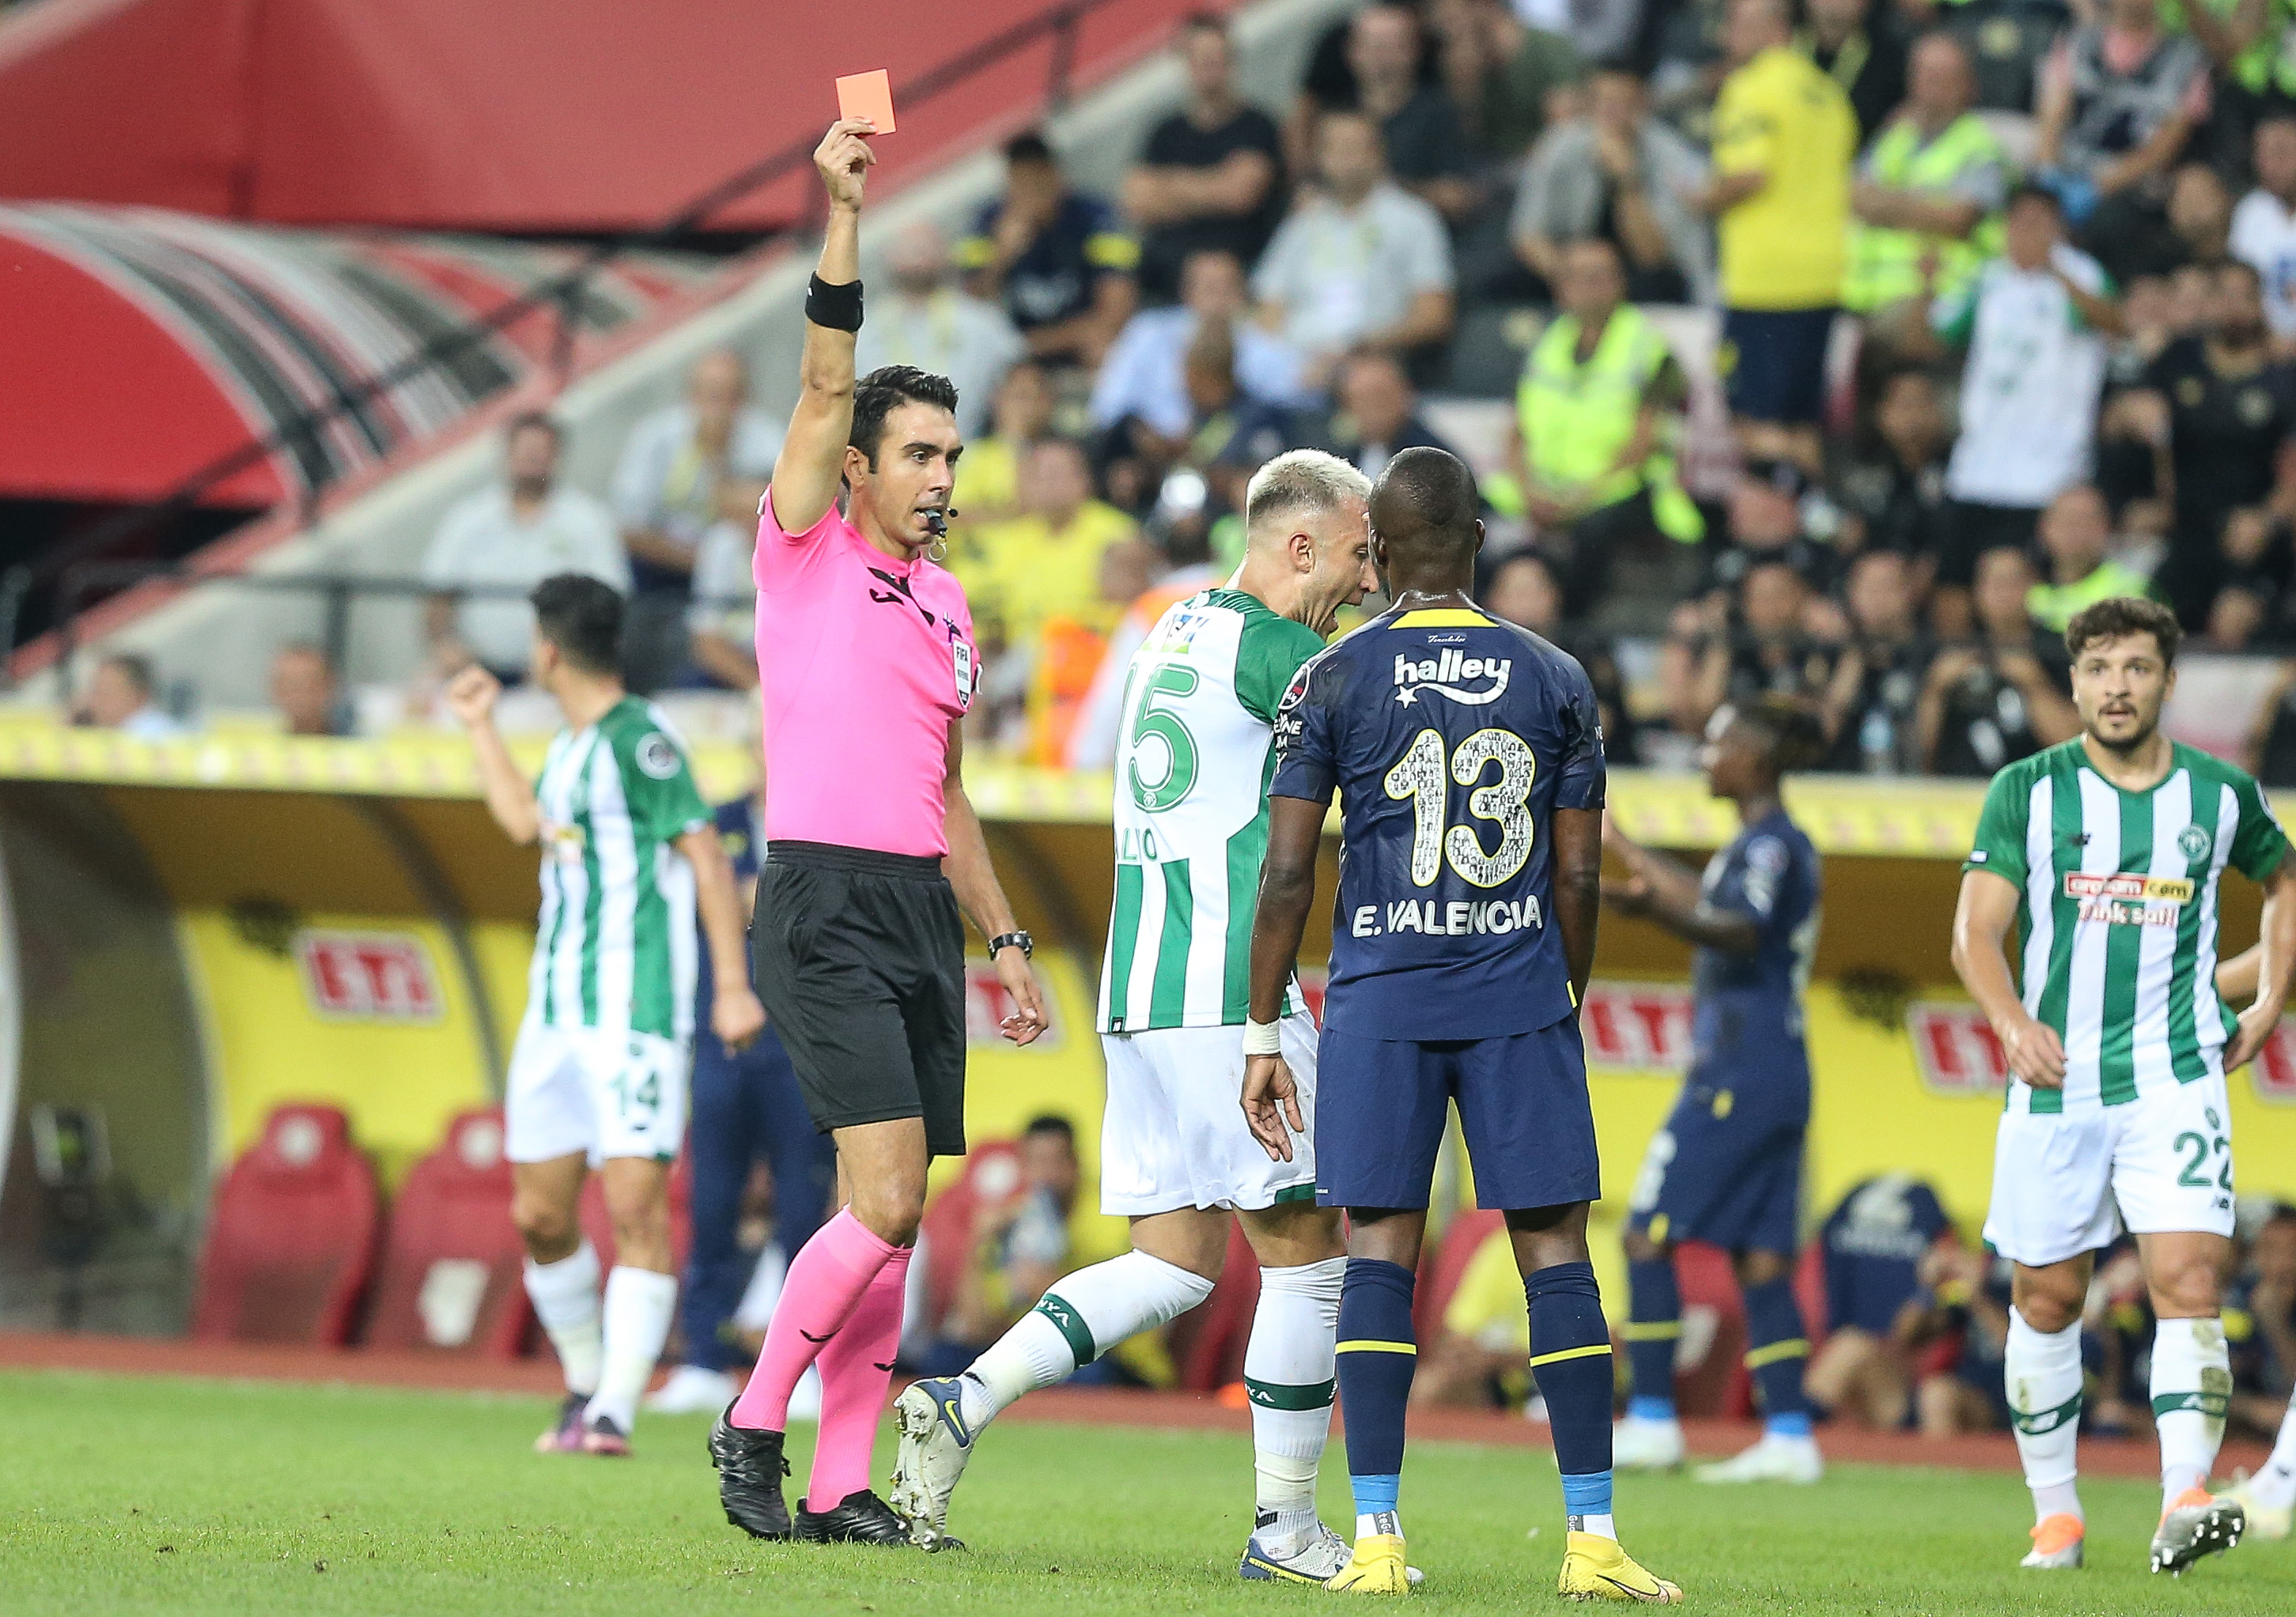 Antalyaspor vs Fenerbahçe: A Clash of Titans